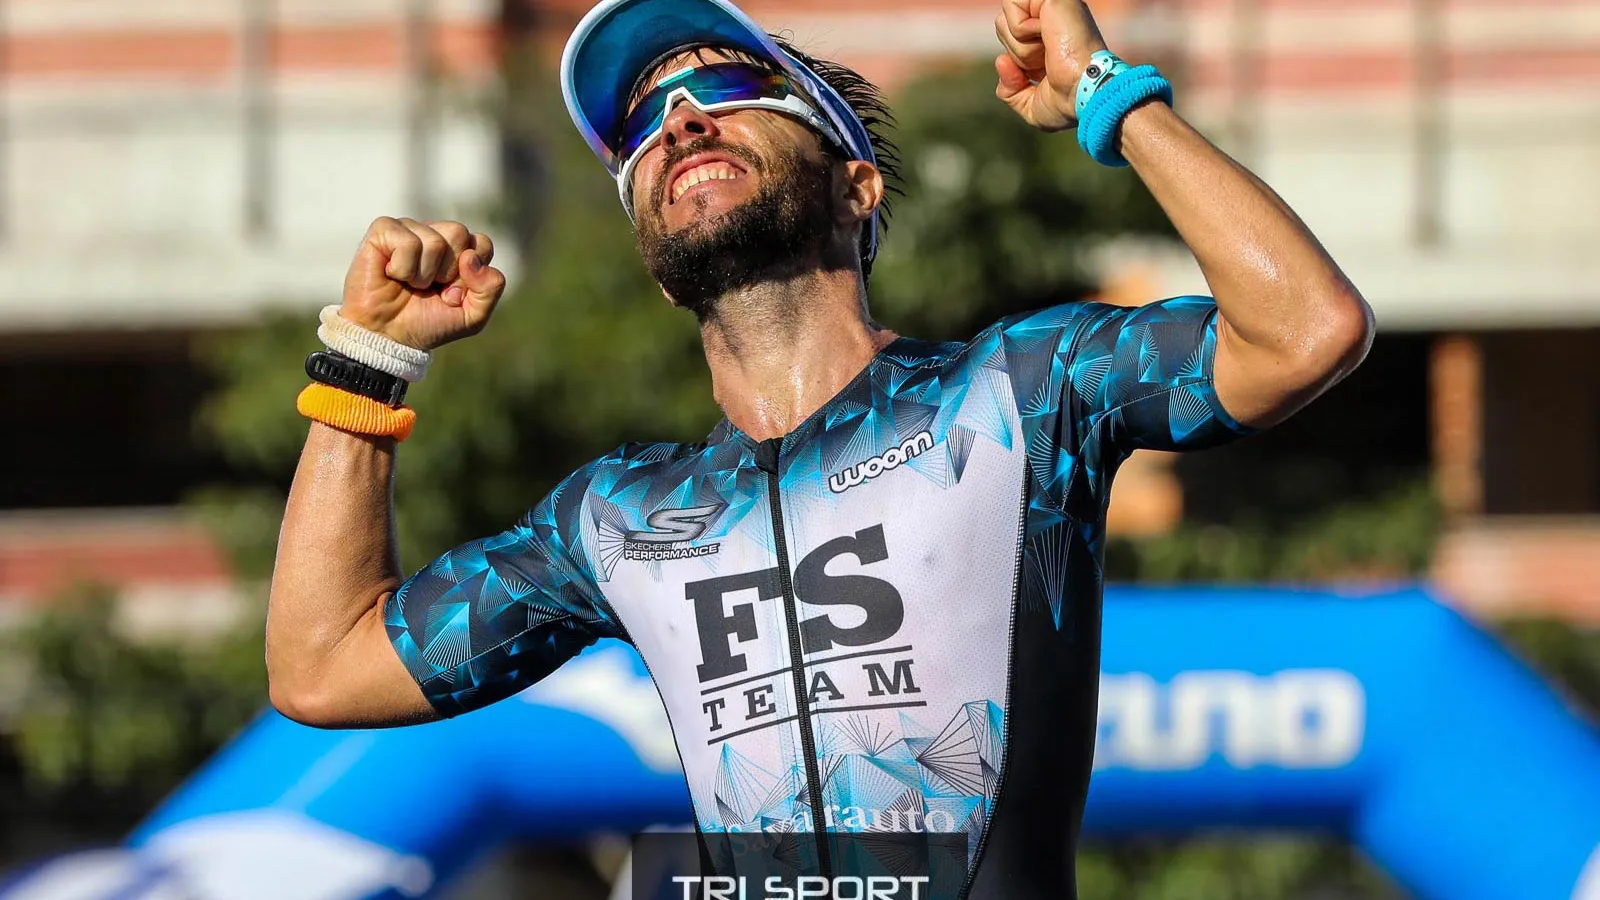 Ironman e Ultramaratonas: Superando limites e desafiando o corpo